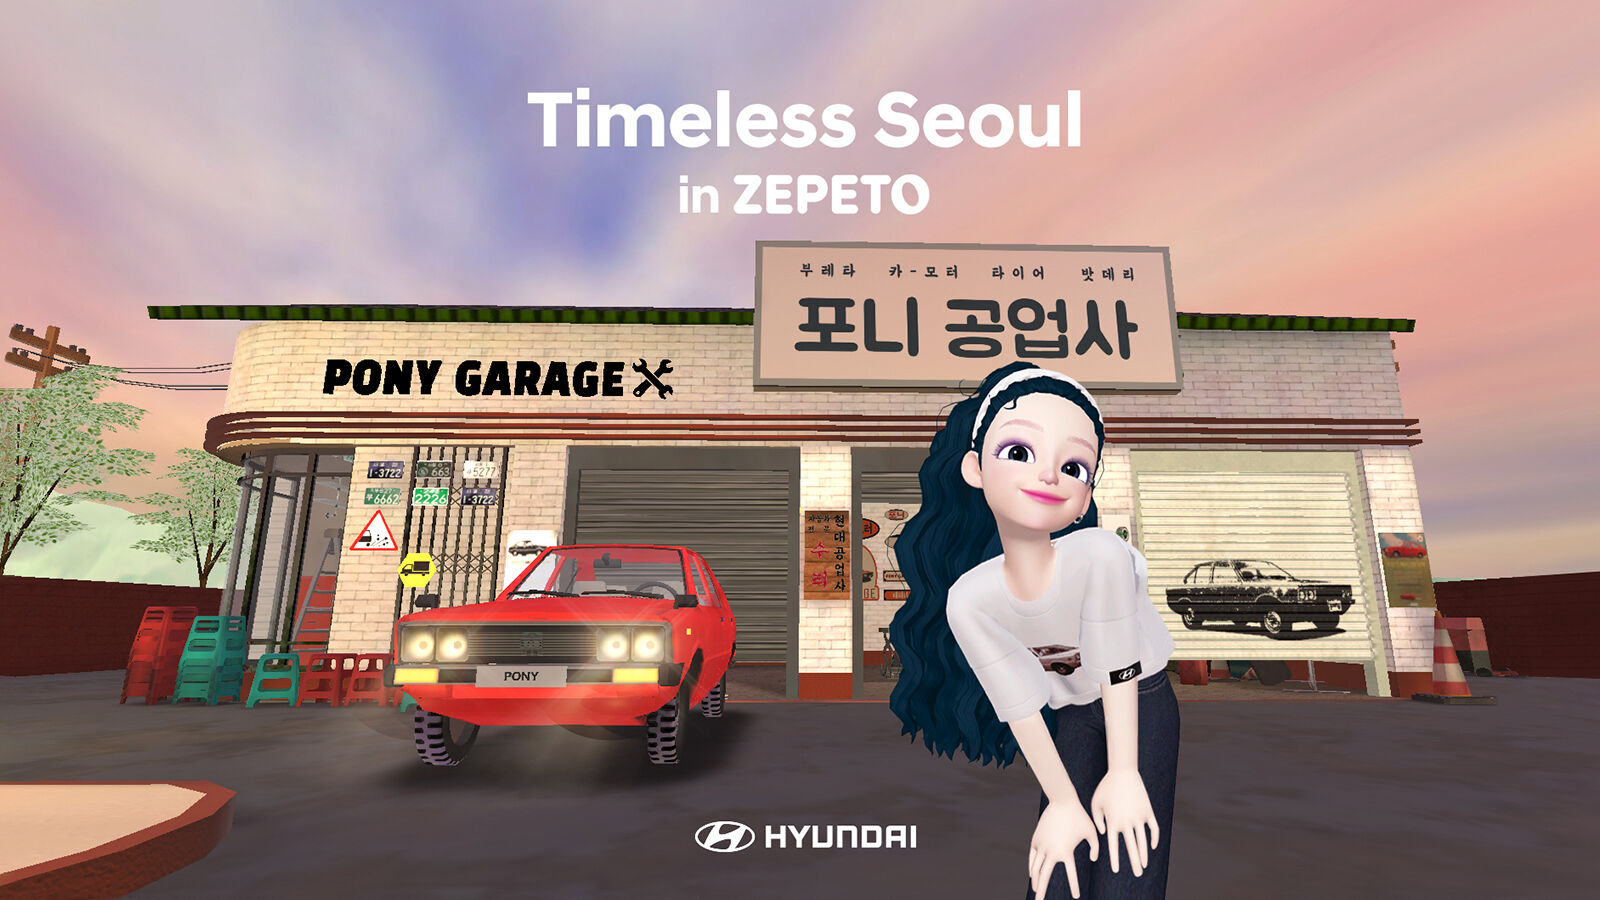 Pony Garage - Timeless Seoul in ZEPETO